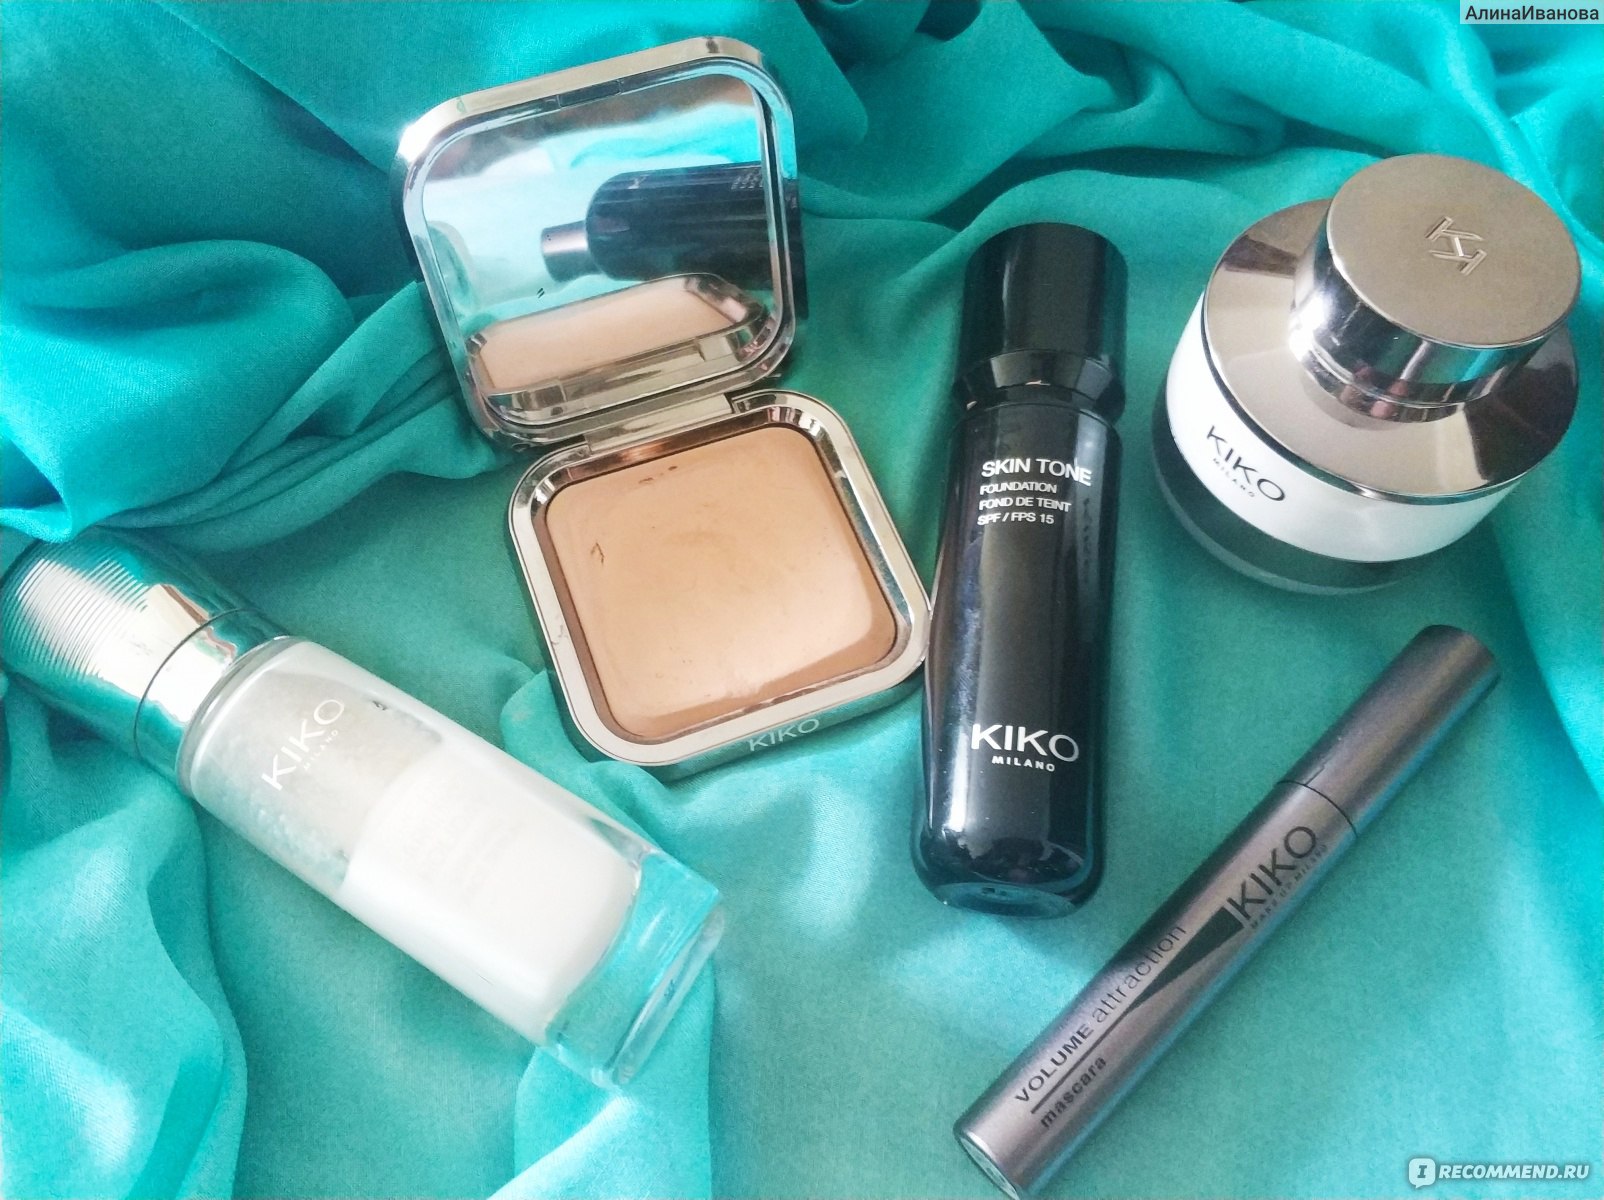 Kiko milano invisible touch face fixing powder | setting and mattifying face powder